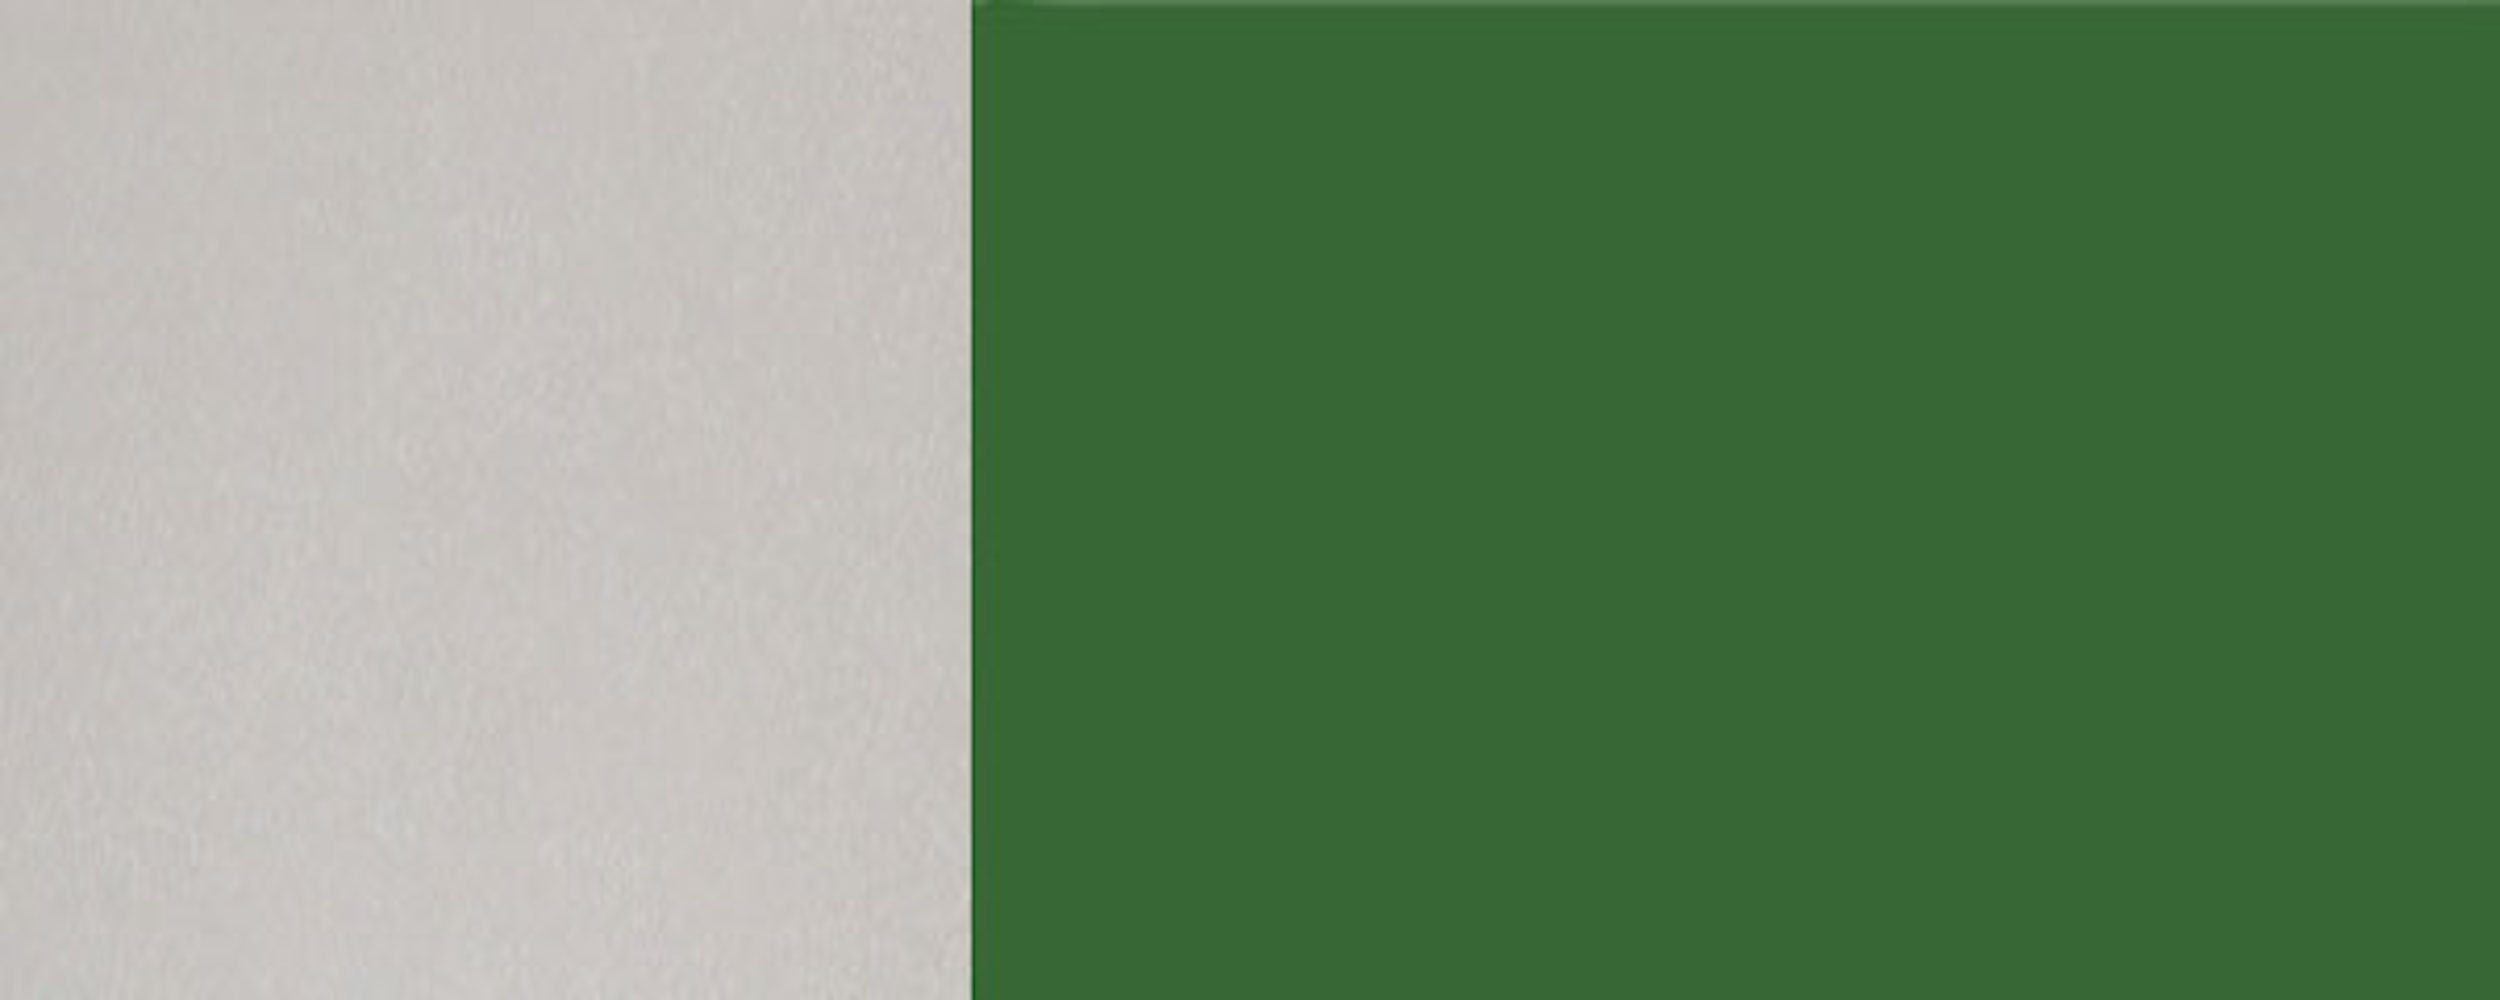 Feldmann-Wohnen (Florence) und smaragdgrün Florence 6001 Korpusfarbe Ausführung Klapphängeschrank grifflos wählbar Hochglanz RAL 60cm 1-türig Front-,